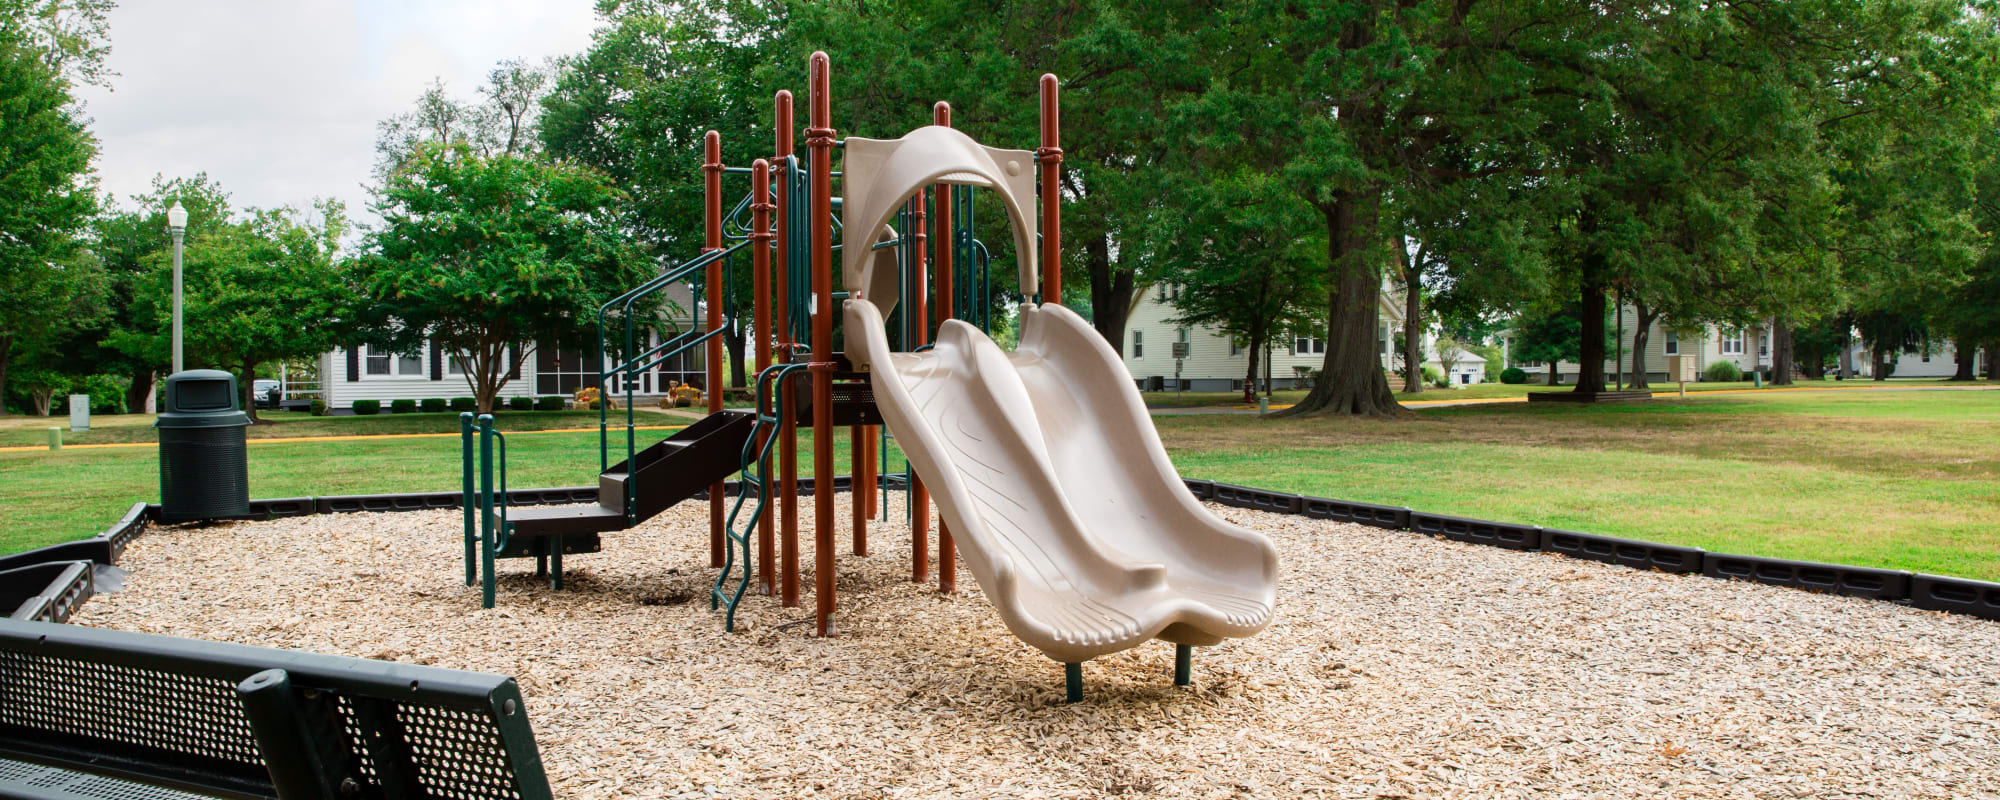 A playground for children at Welsh Road in Dahlgren, Virginia